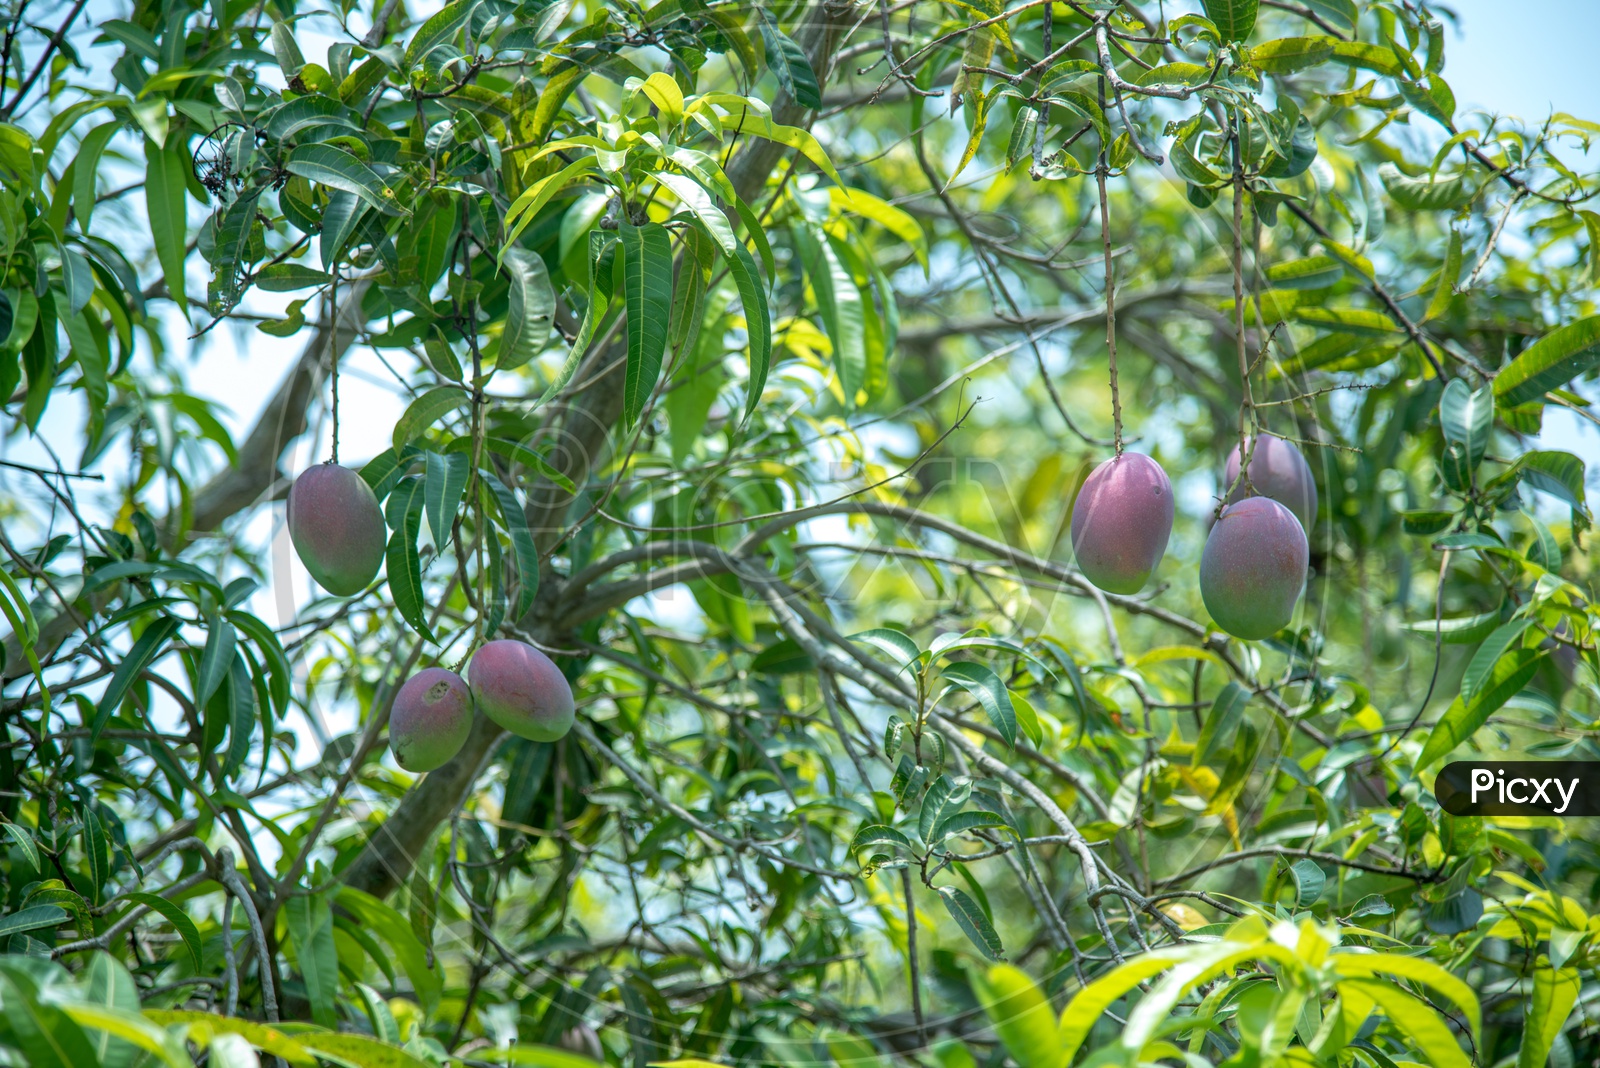 Suvarna Rekha, A Variety of Mango.